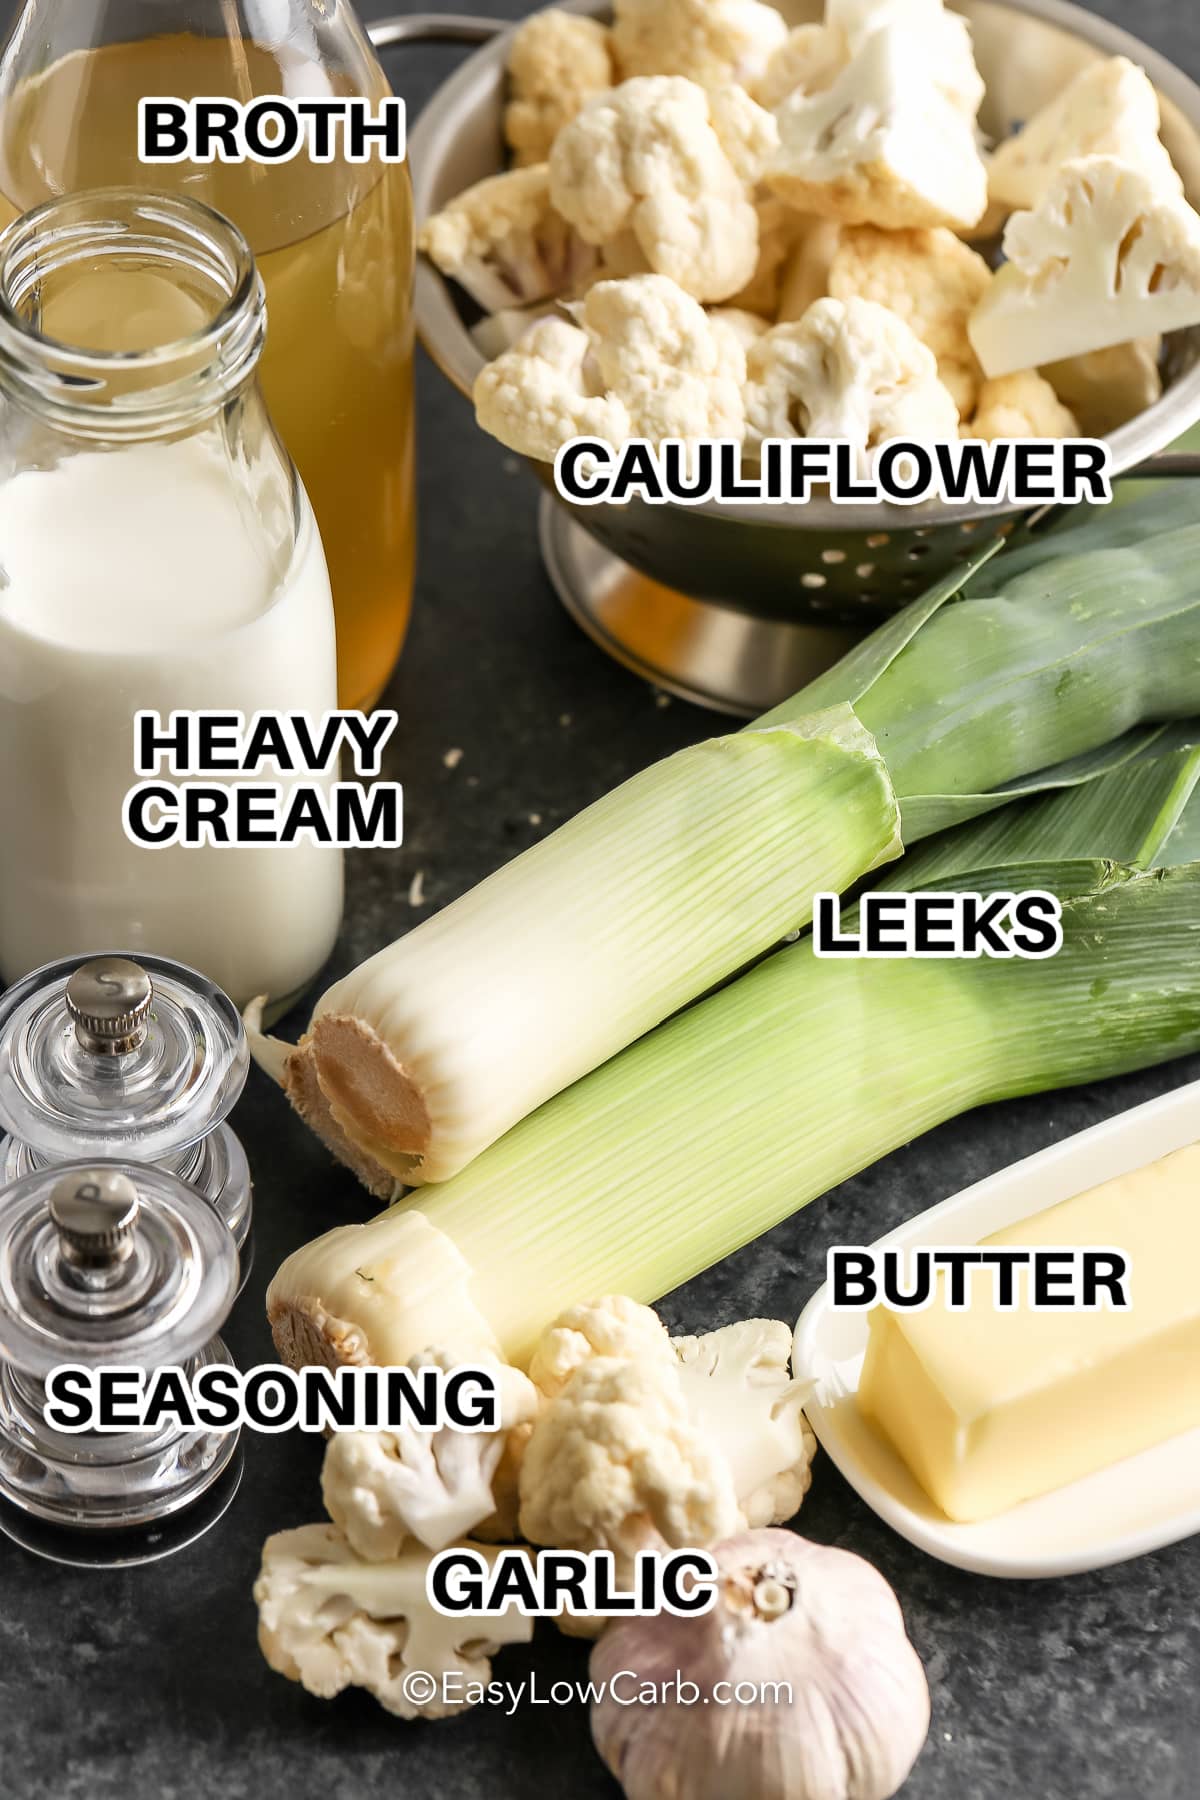 Labeled ingredients to make cauliflower leek soup